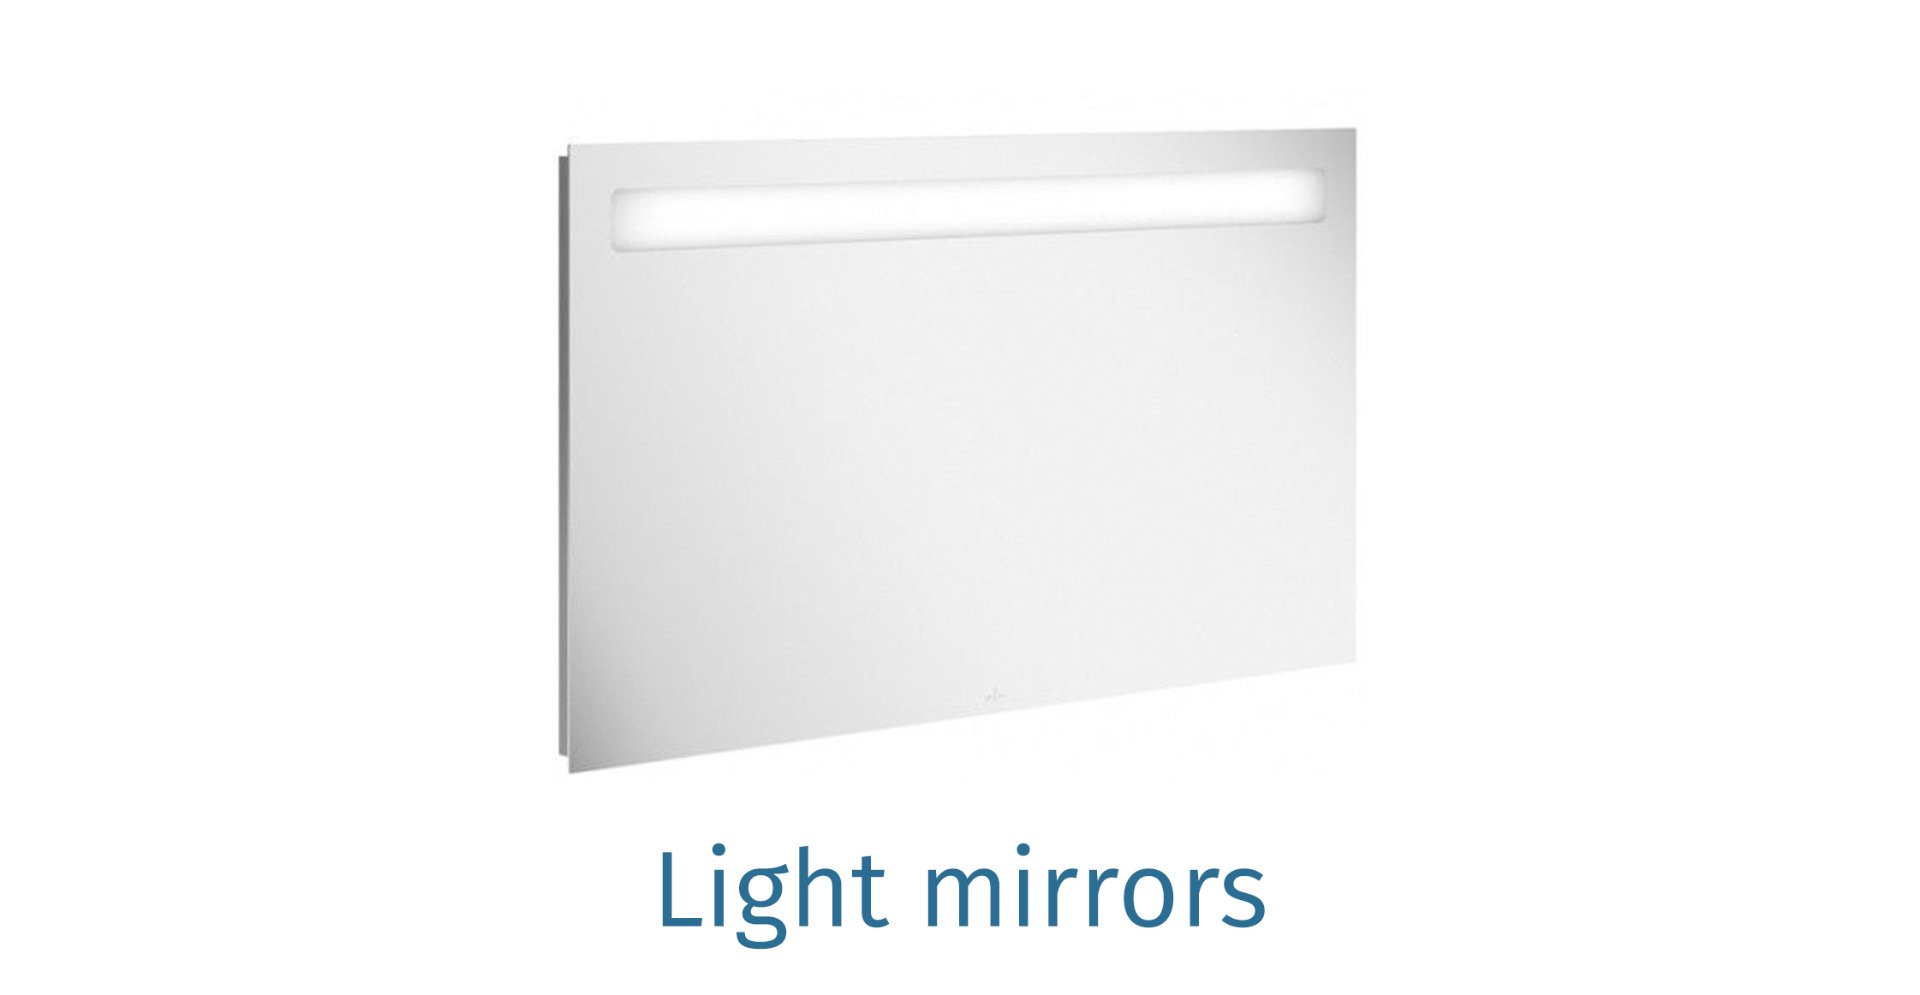 Light mirrors